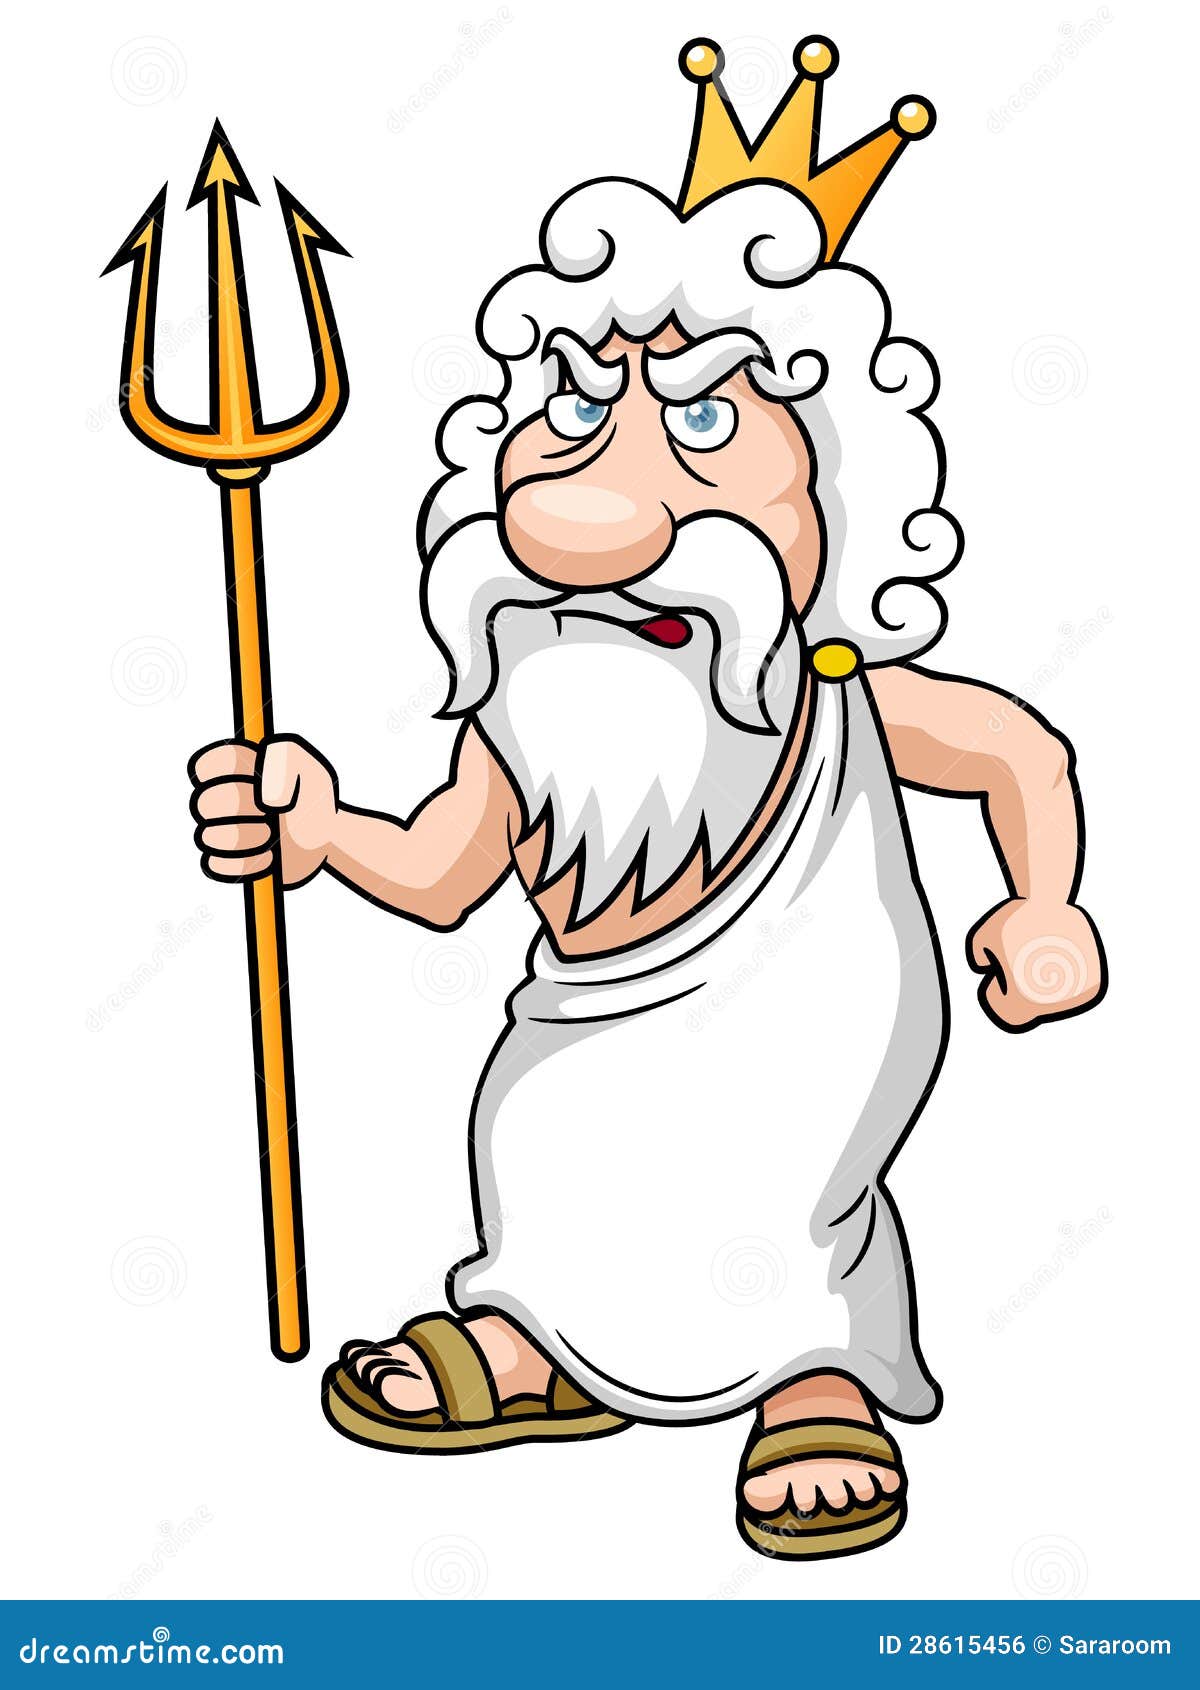 Cartoon Poseidon With Trident Royalty Free Stock Image - Image: 28615456